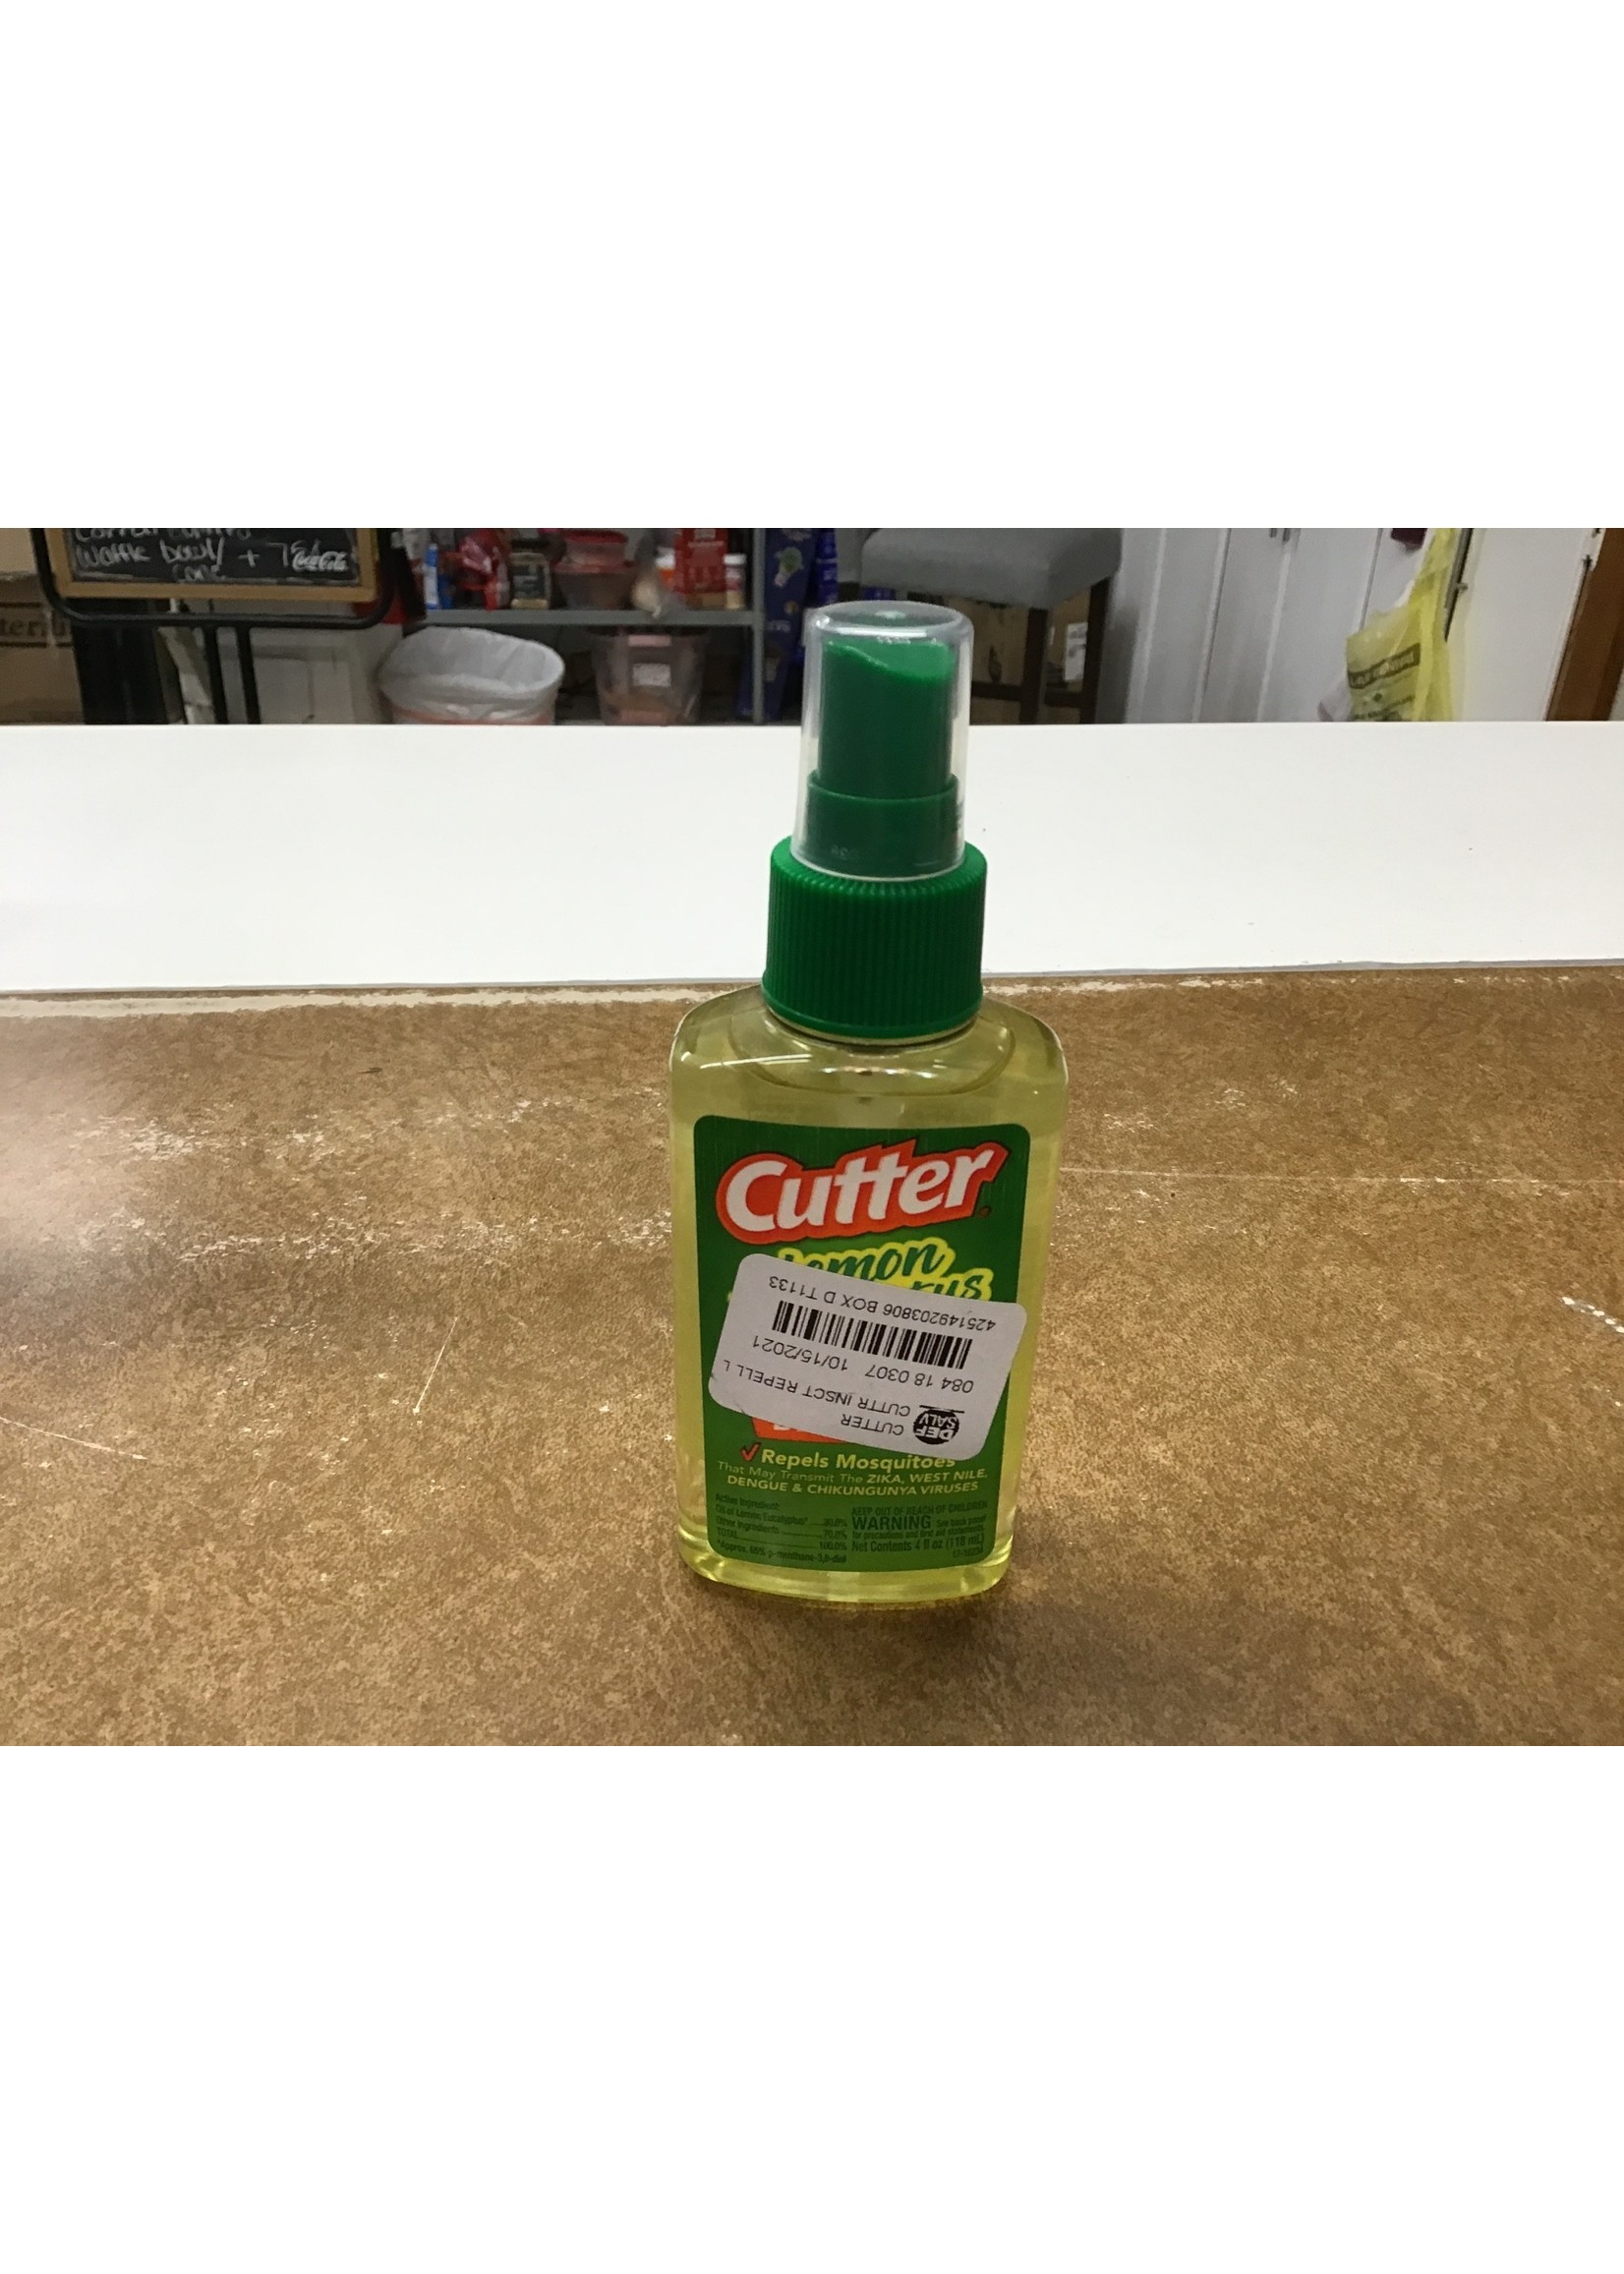 Cutter® Lemon Eucalyptus Insect Repellent (Pump Spray)